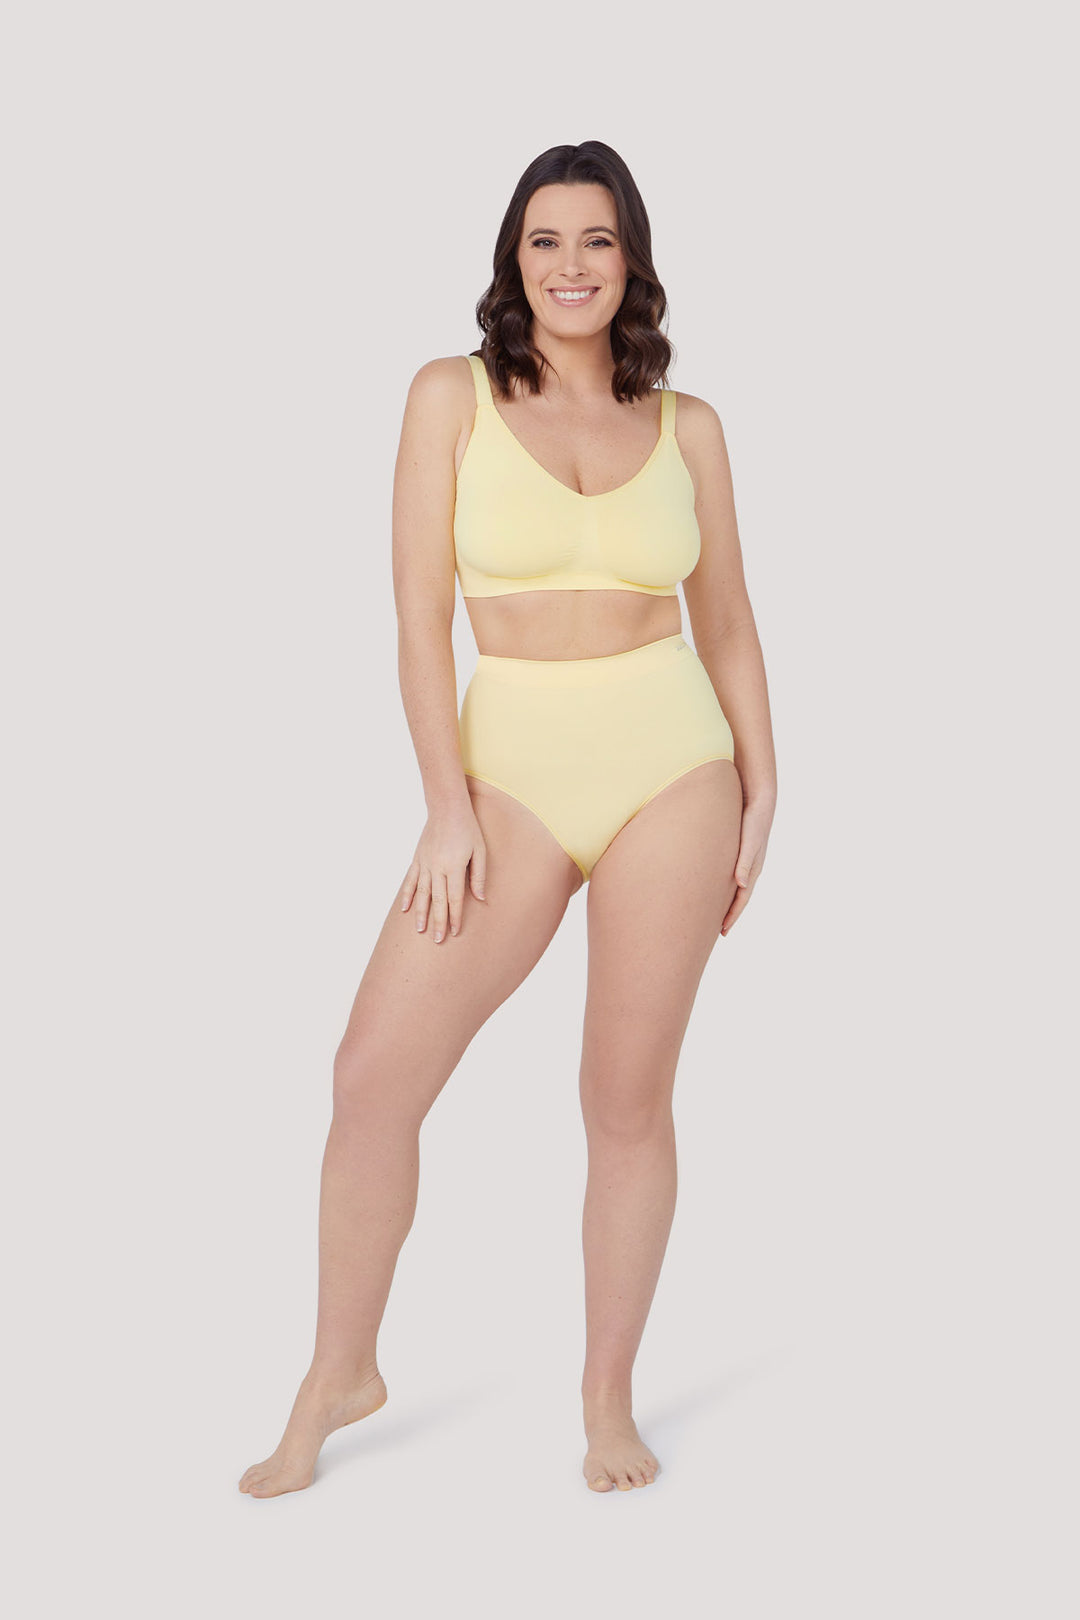 Women's slimming & firming underwear 3 pack | Bella Bodies Australia | Lemon